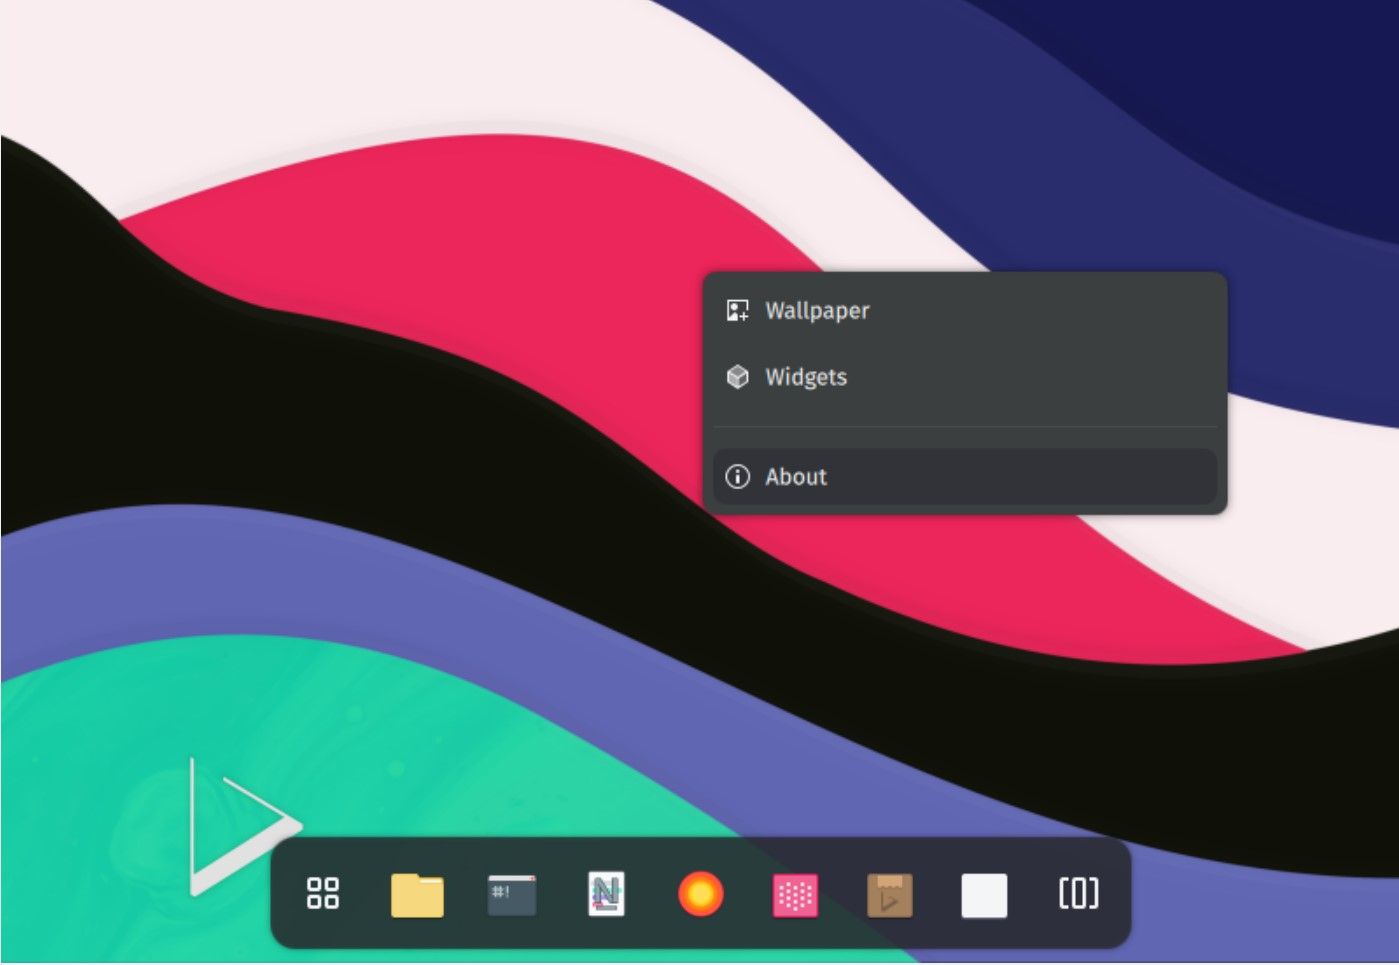 Nitrux desktop environment with a menu bar at the bottom